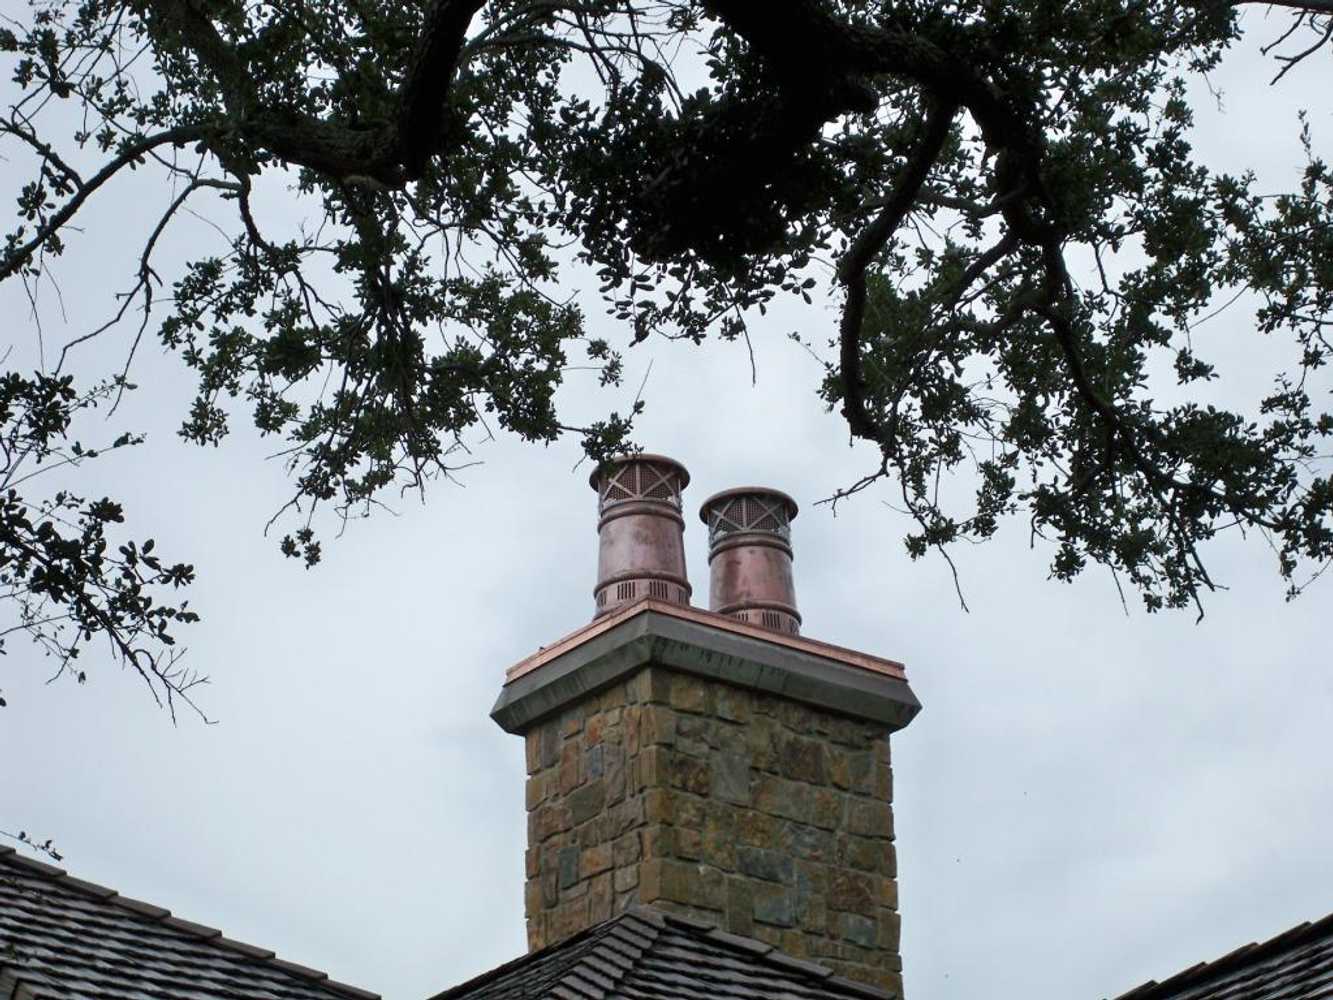 European Copper Pots on 5 chimneys.